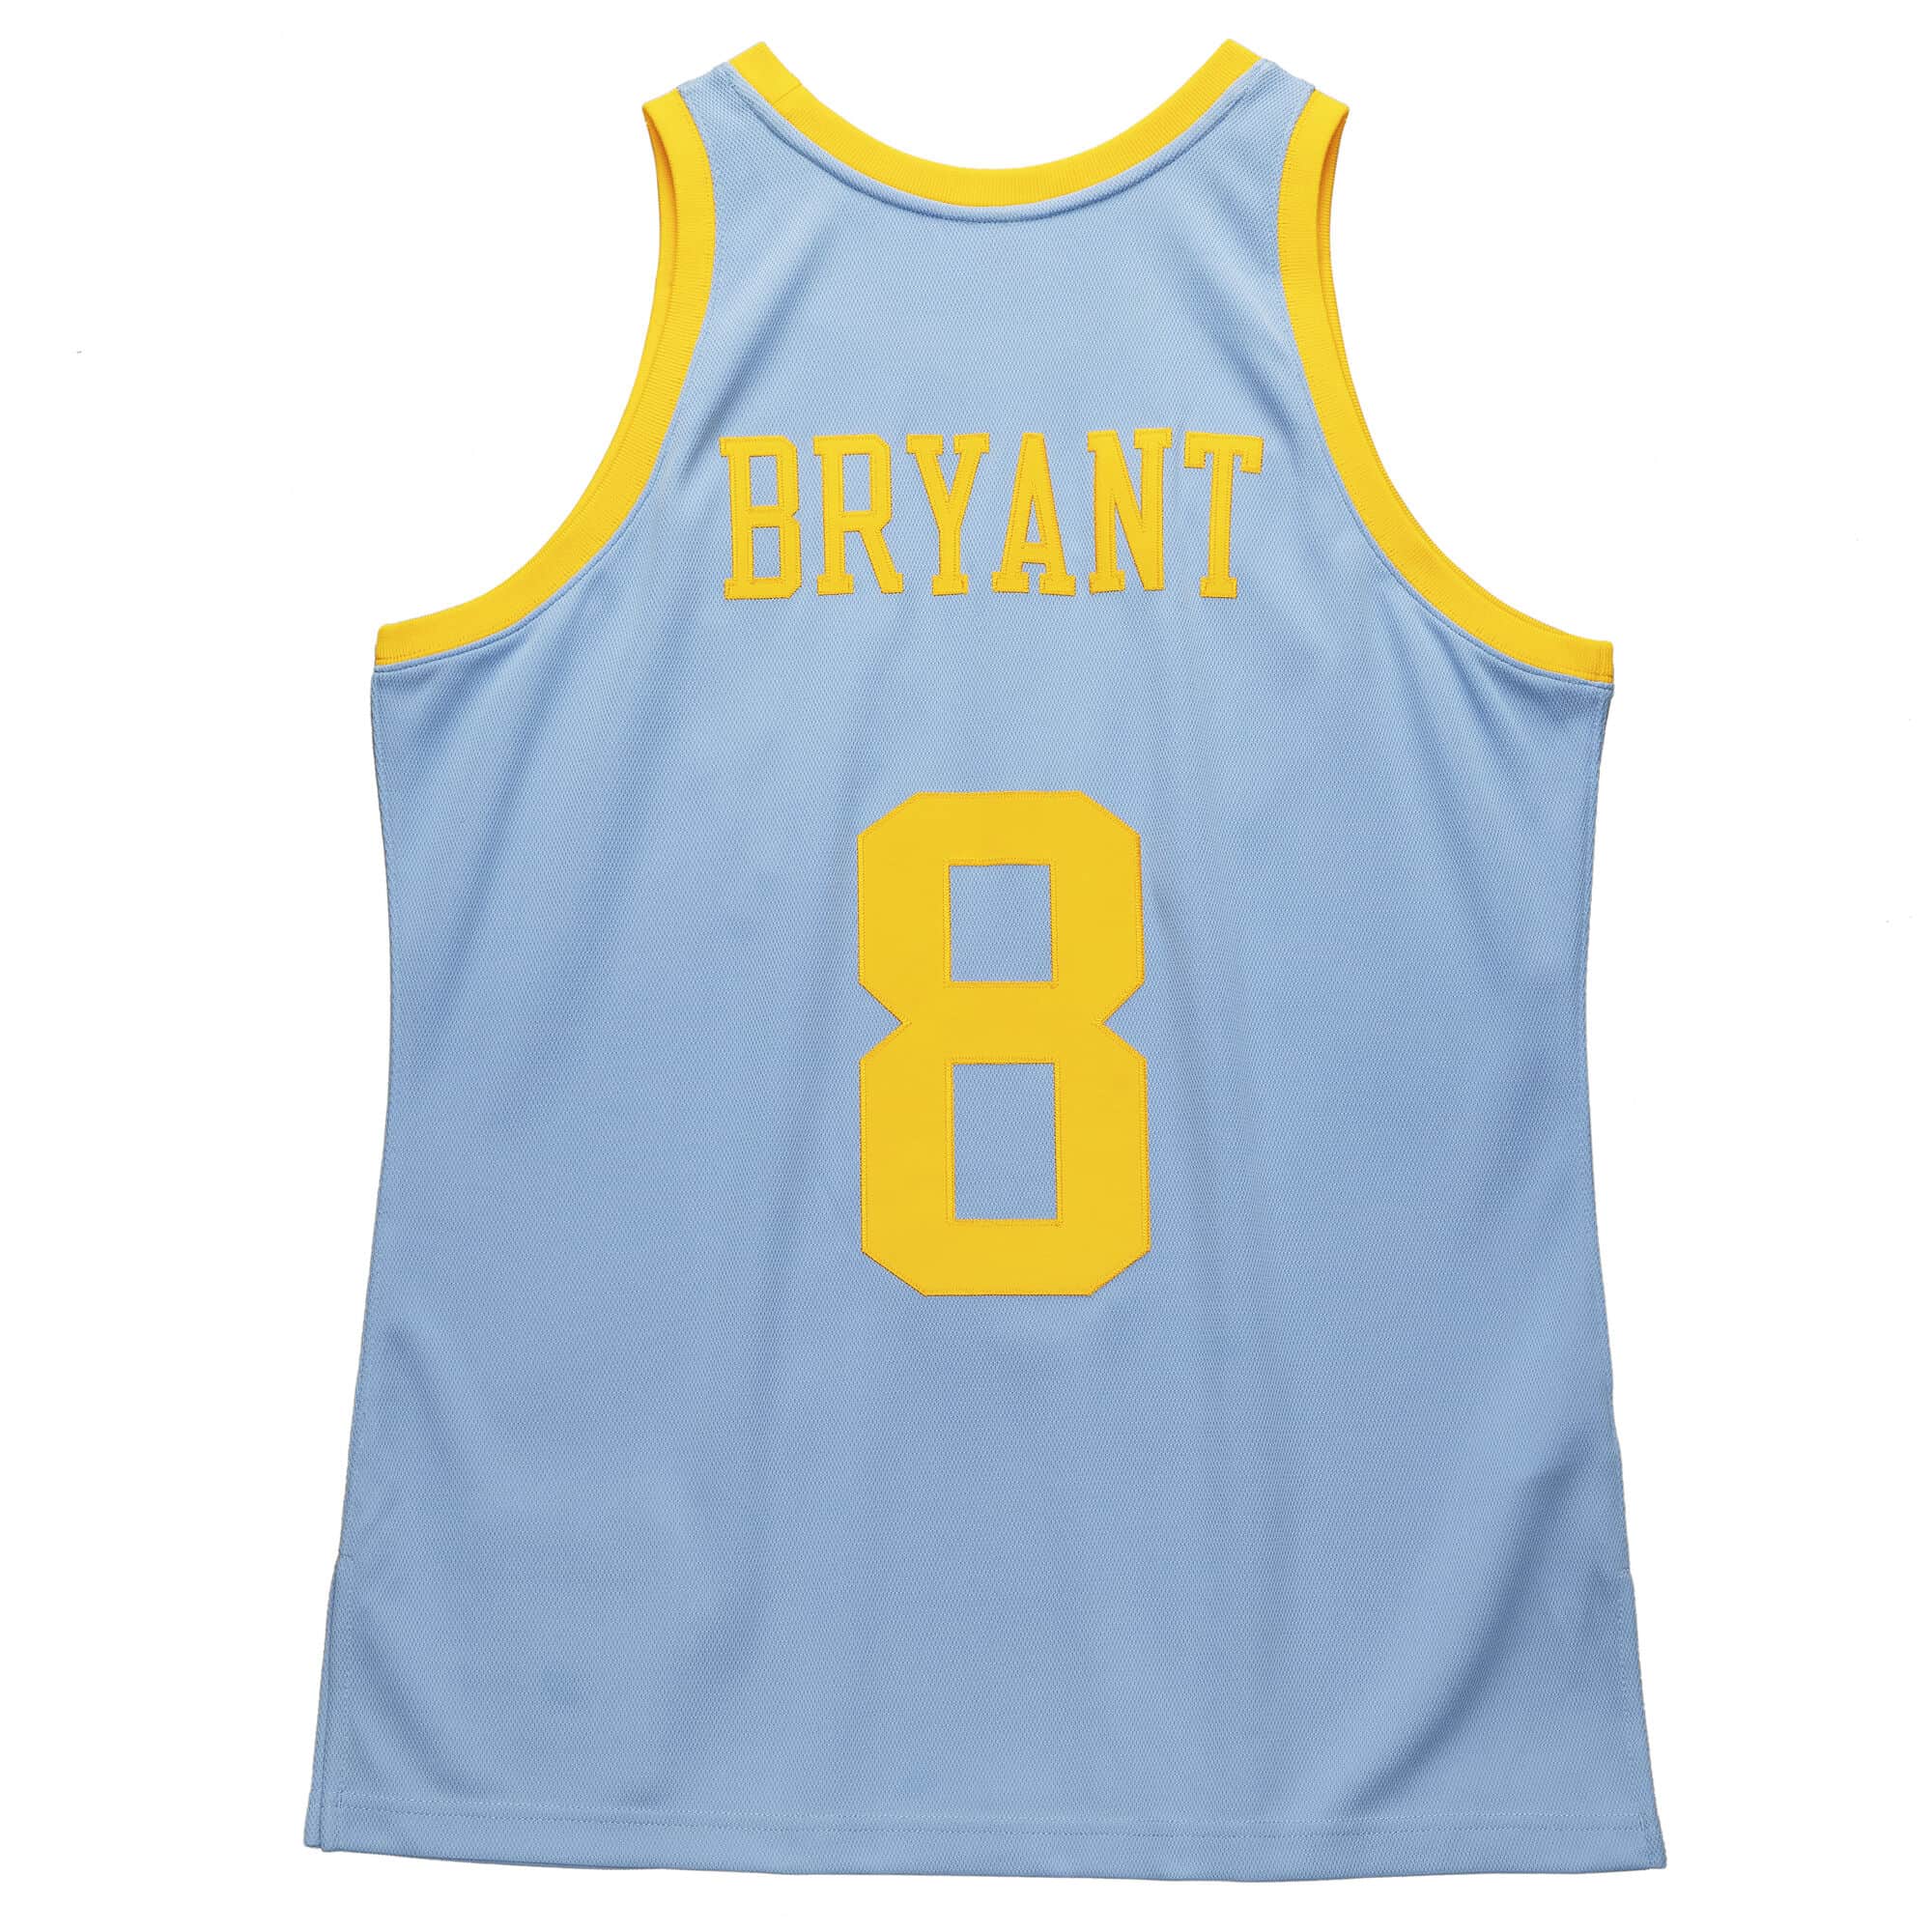 Limited Edition Kobe Bryant Baseball Jersey - Only 100 Made! - Pullama